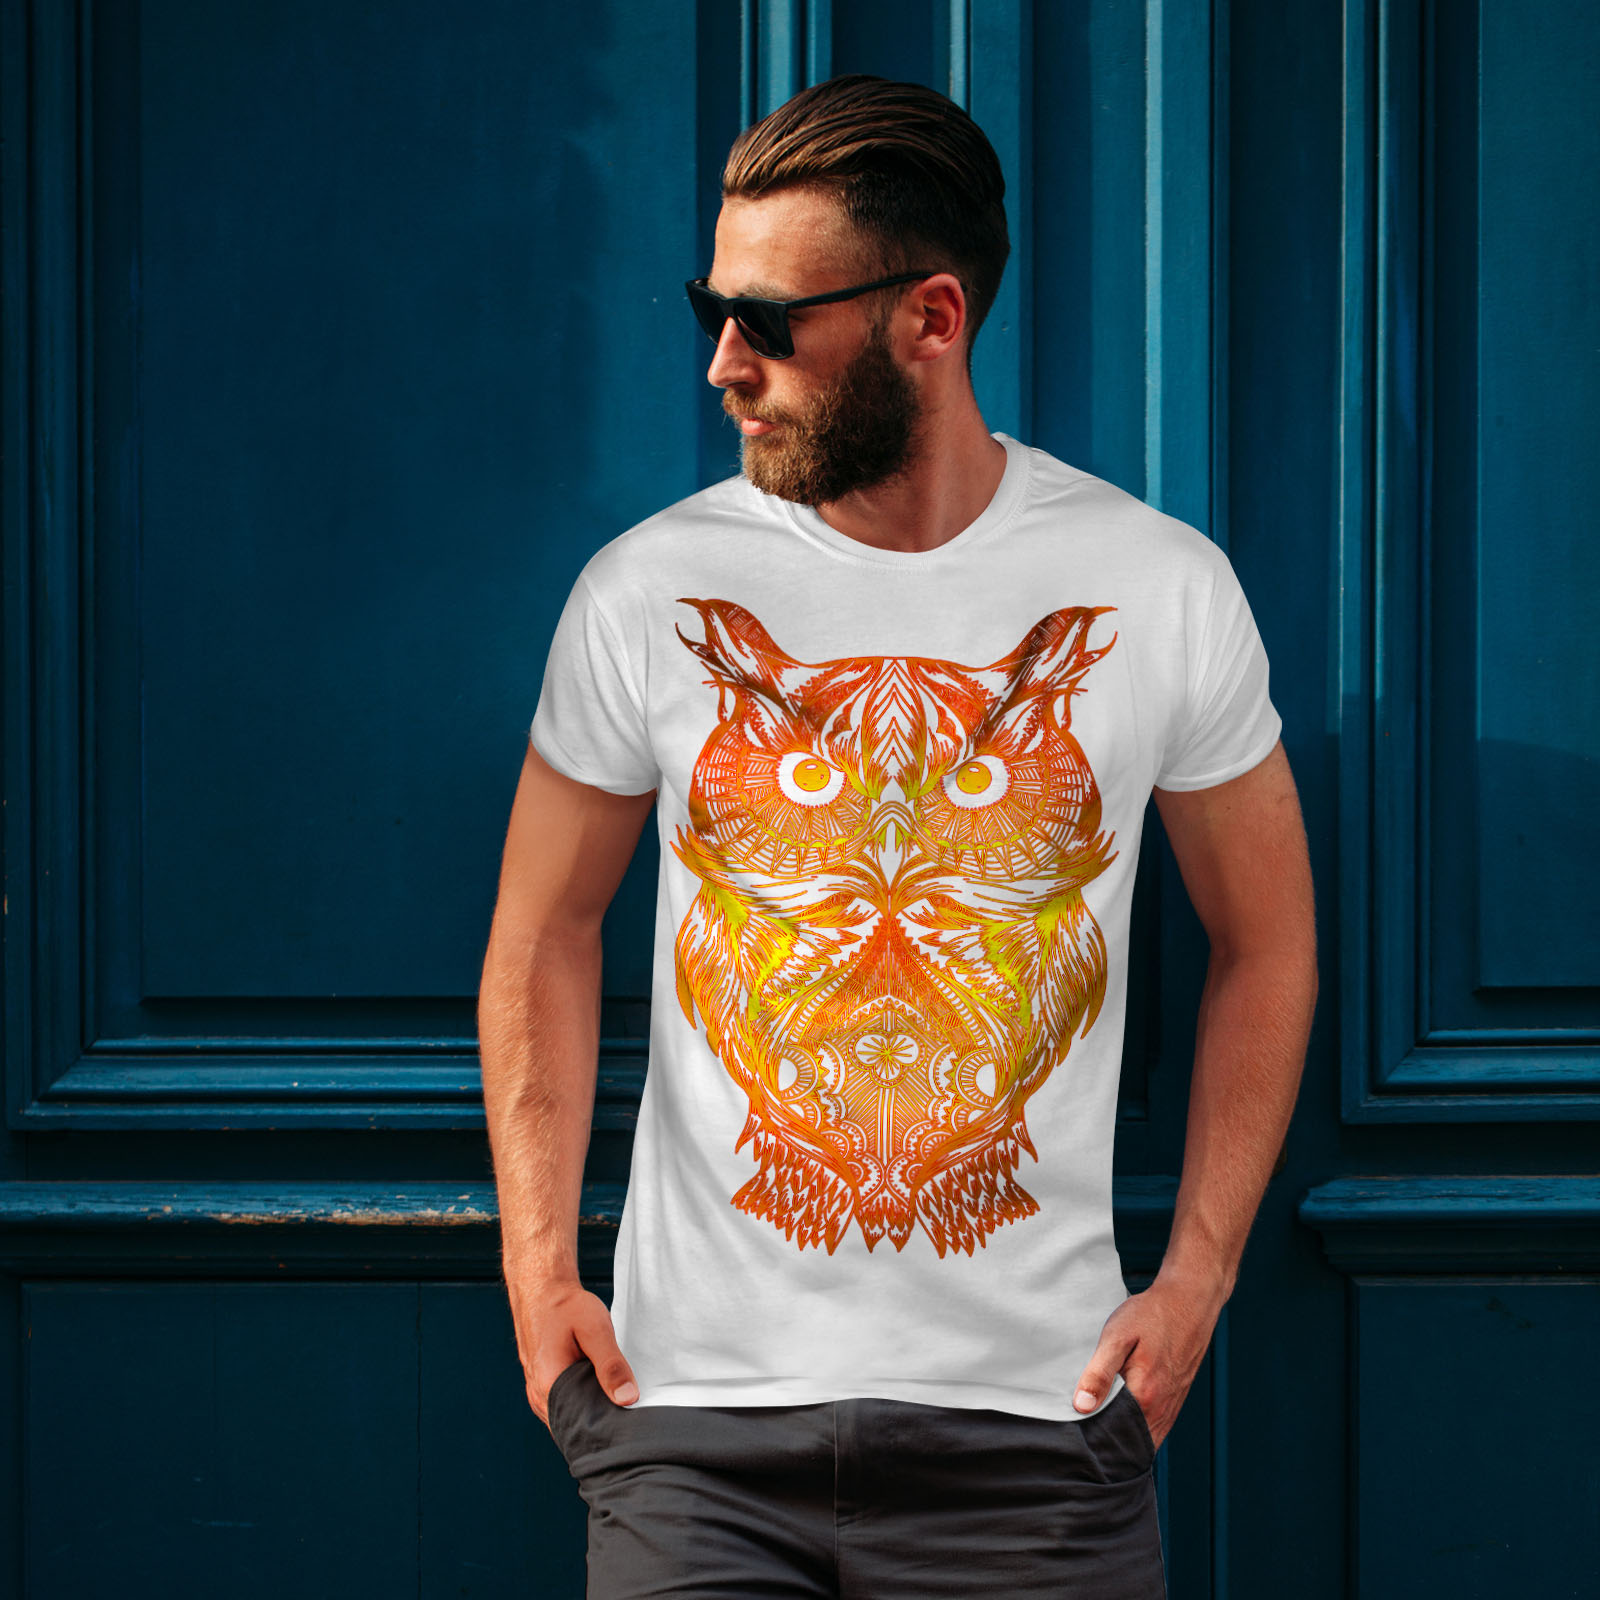 thumbnail 10  - Wellcoda Night Owl On Fire Mens T-shirt, Burning Graphic Design Printed Tee